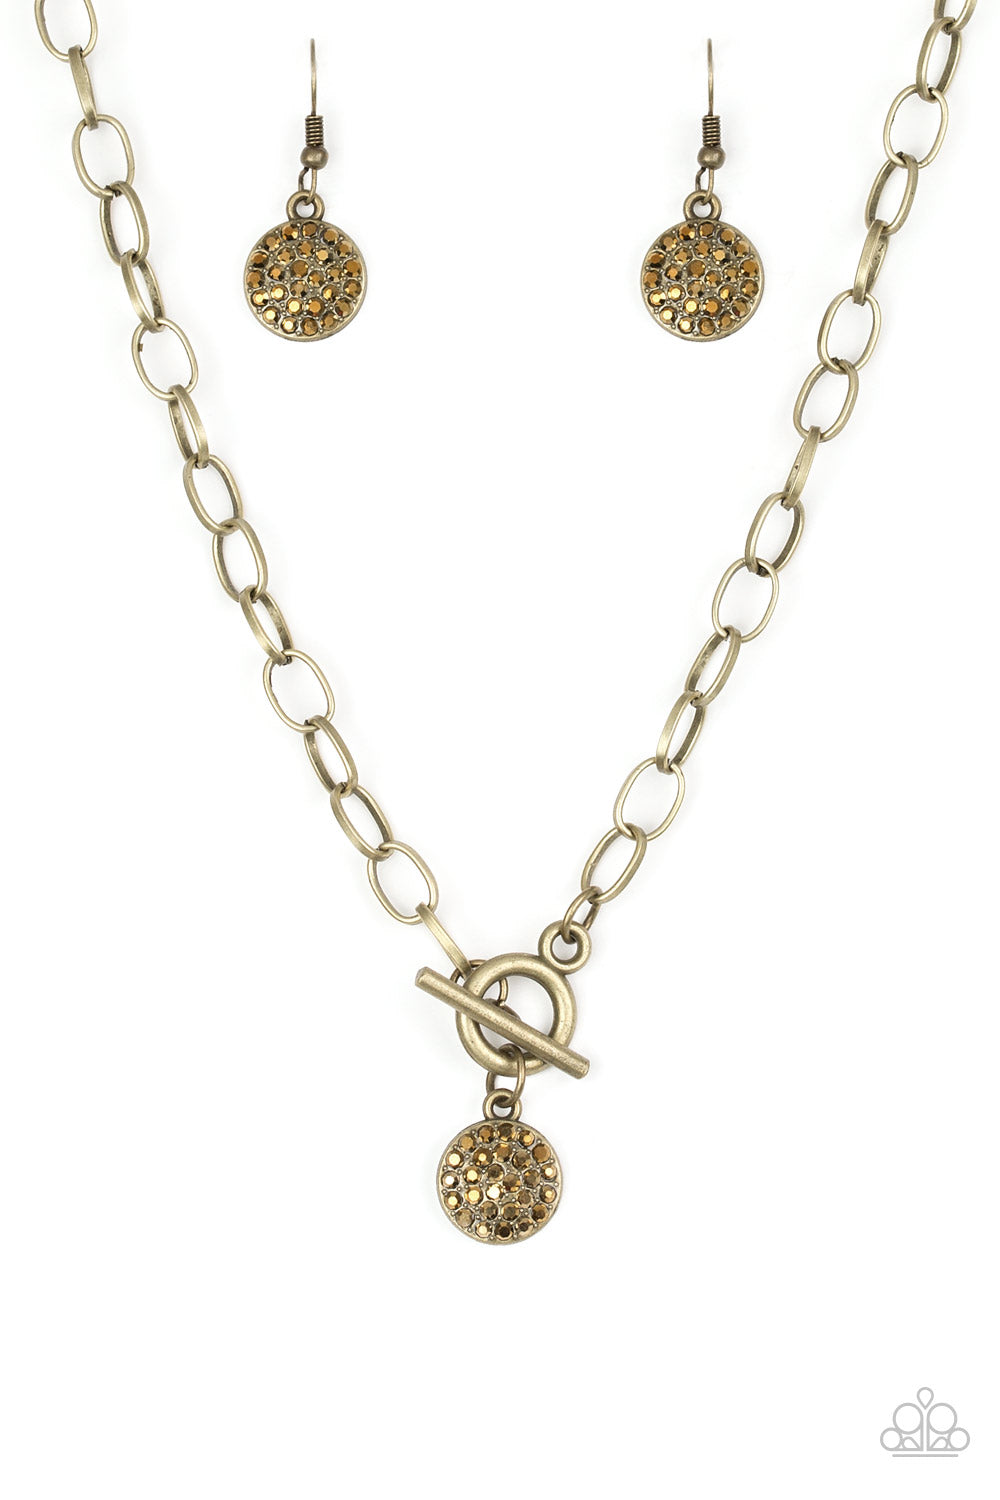 Sorority Sisters - Brass Necklace freeshipping - JewLz4u Gemstone Gallery